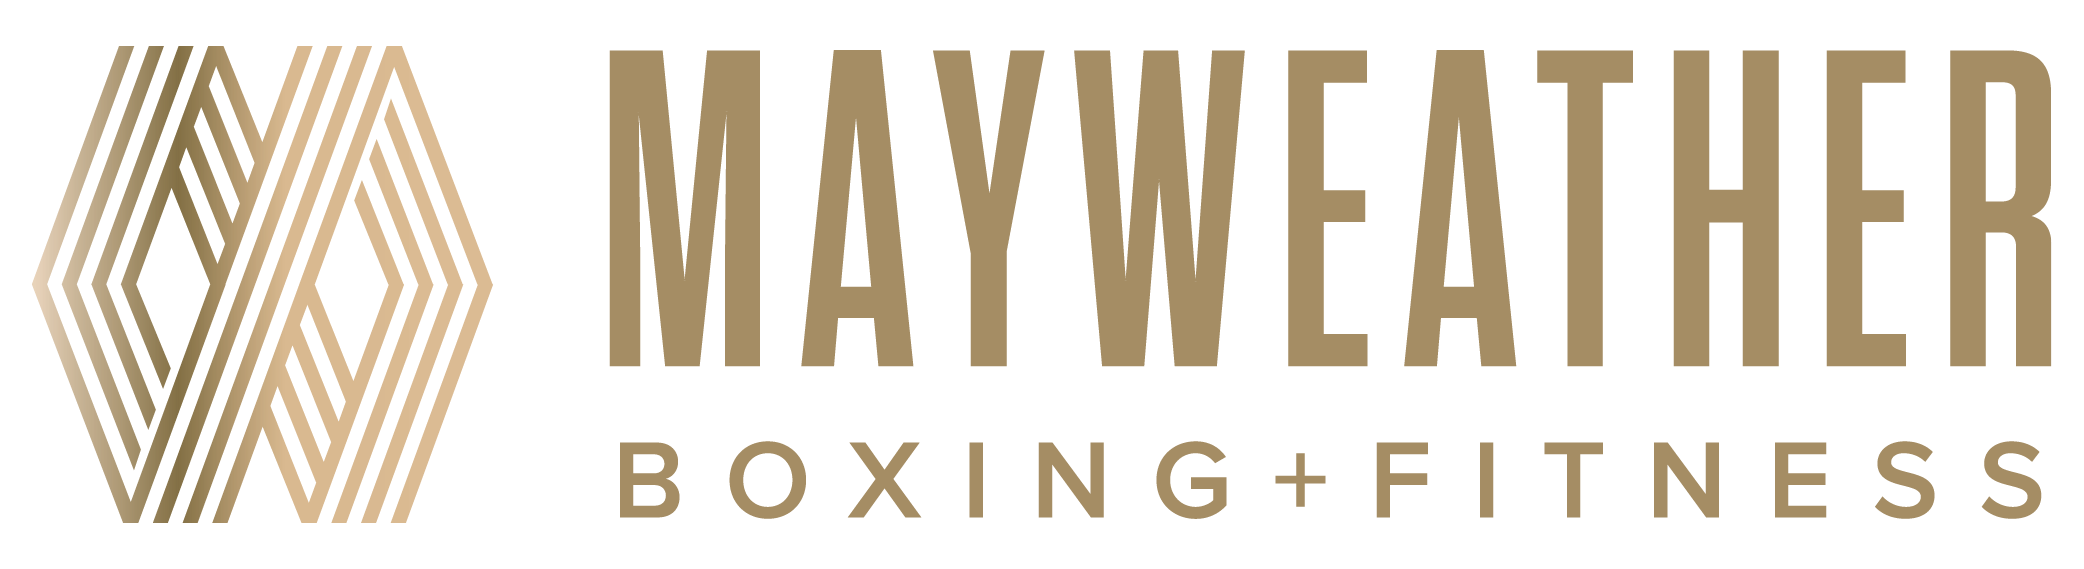 PHOTO ESSAY: Mayweather Boxing + Fitness Grand Opening in Tukwila